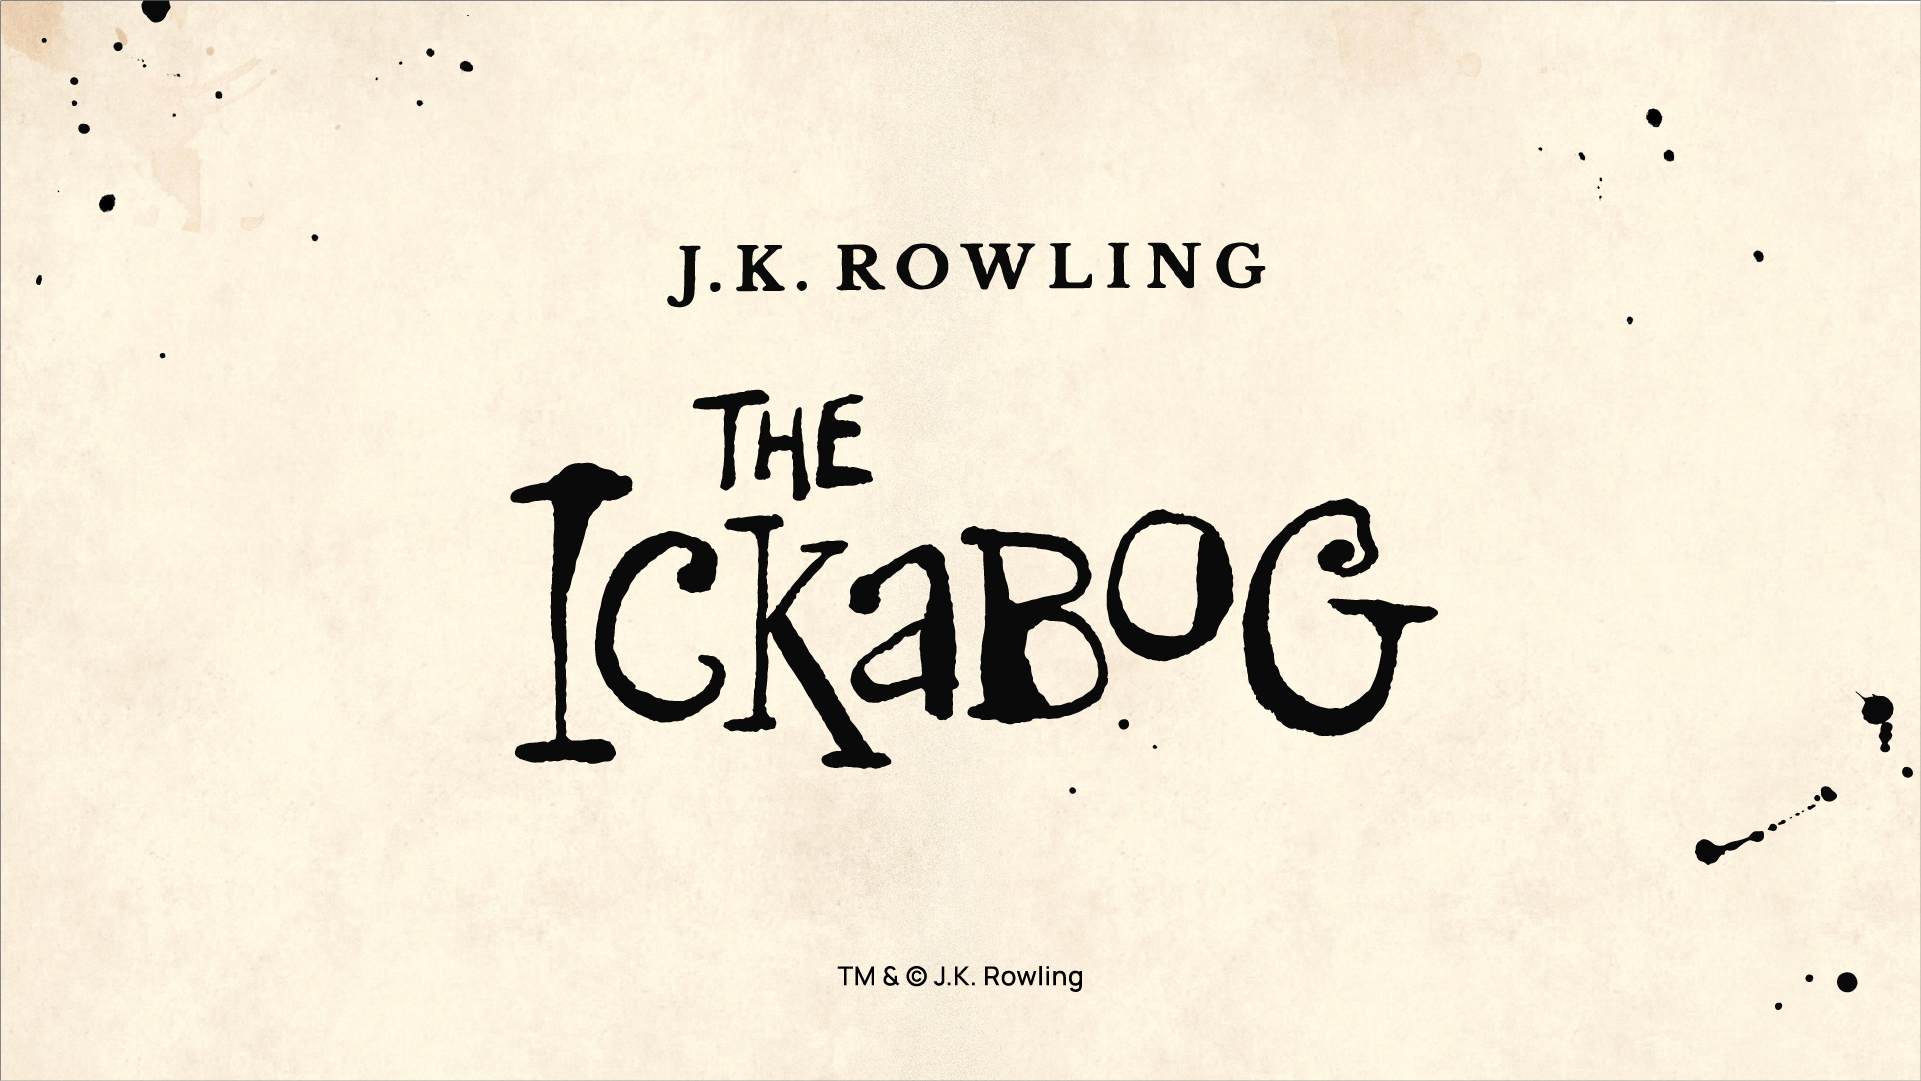 J.K. Rowling Introduces The Ickabog